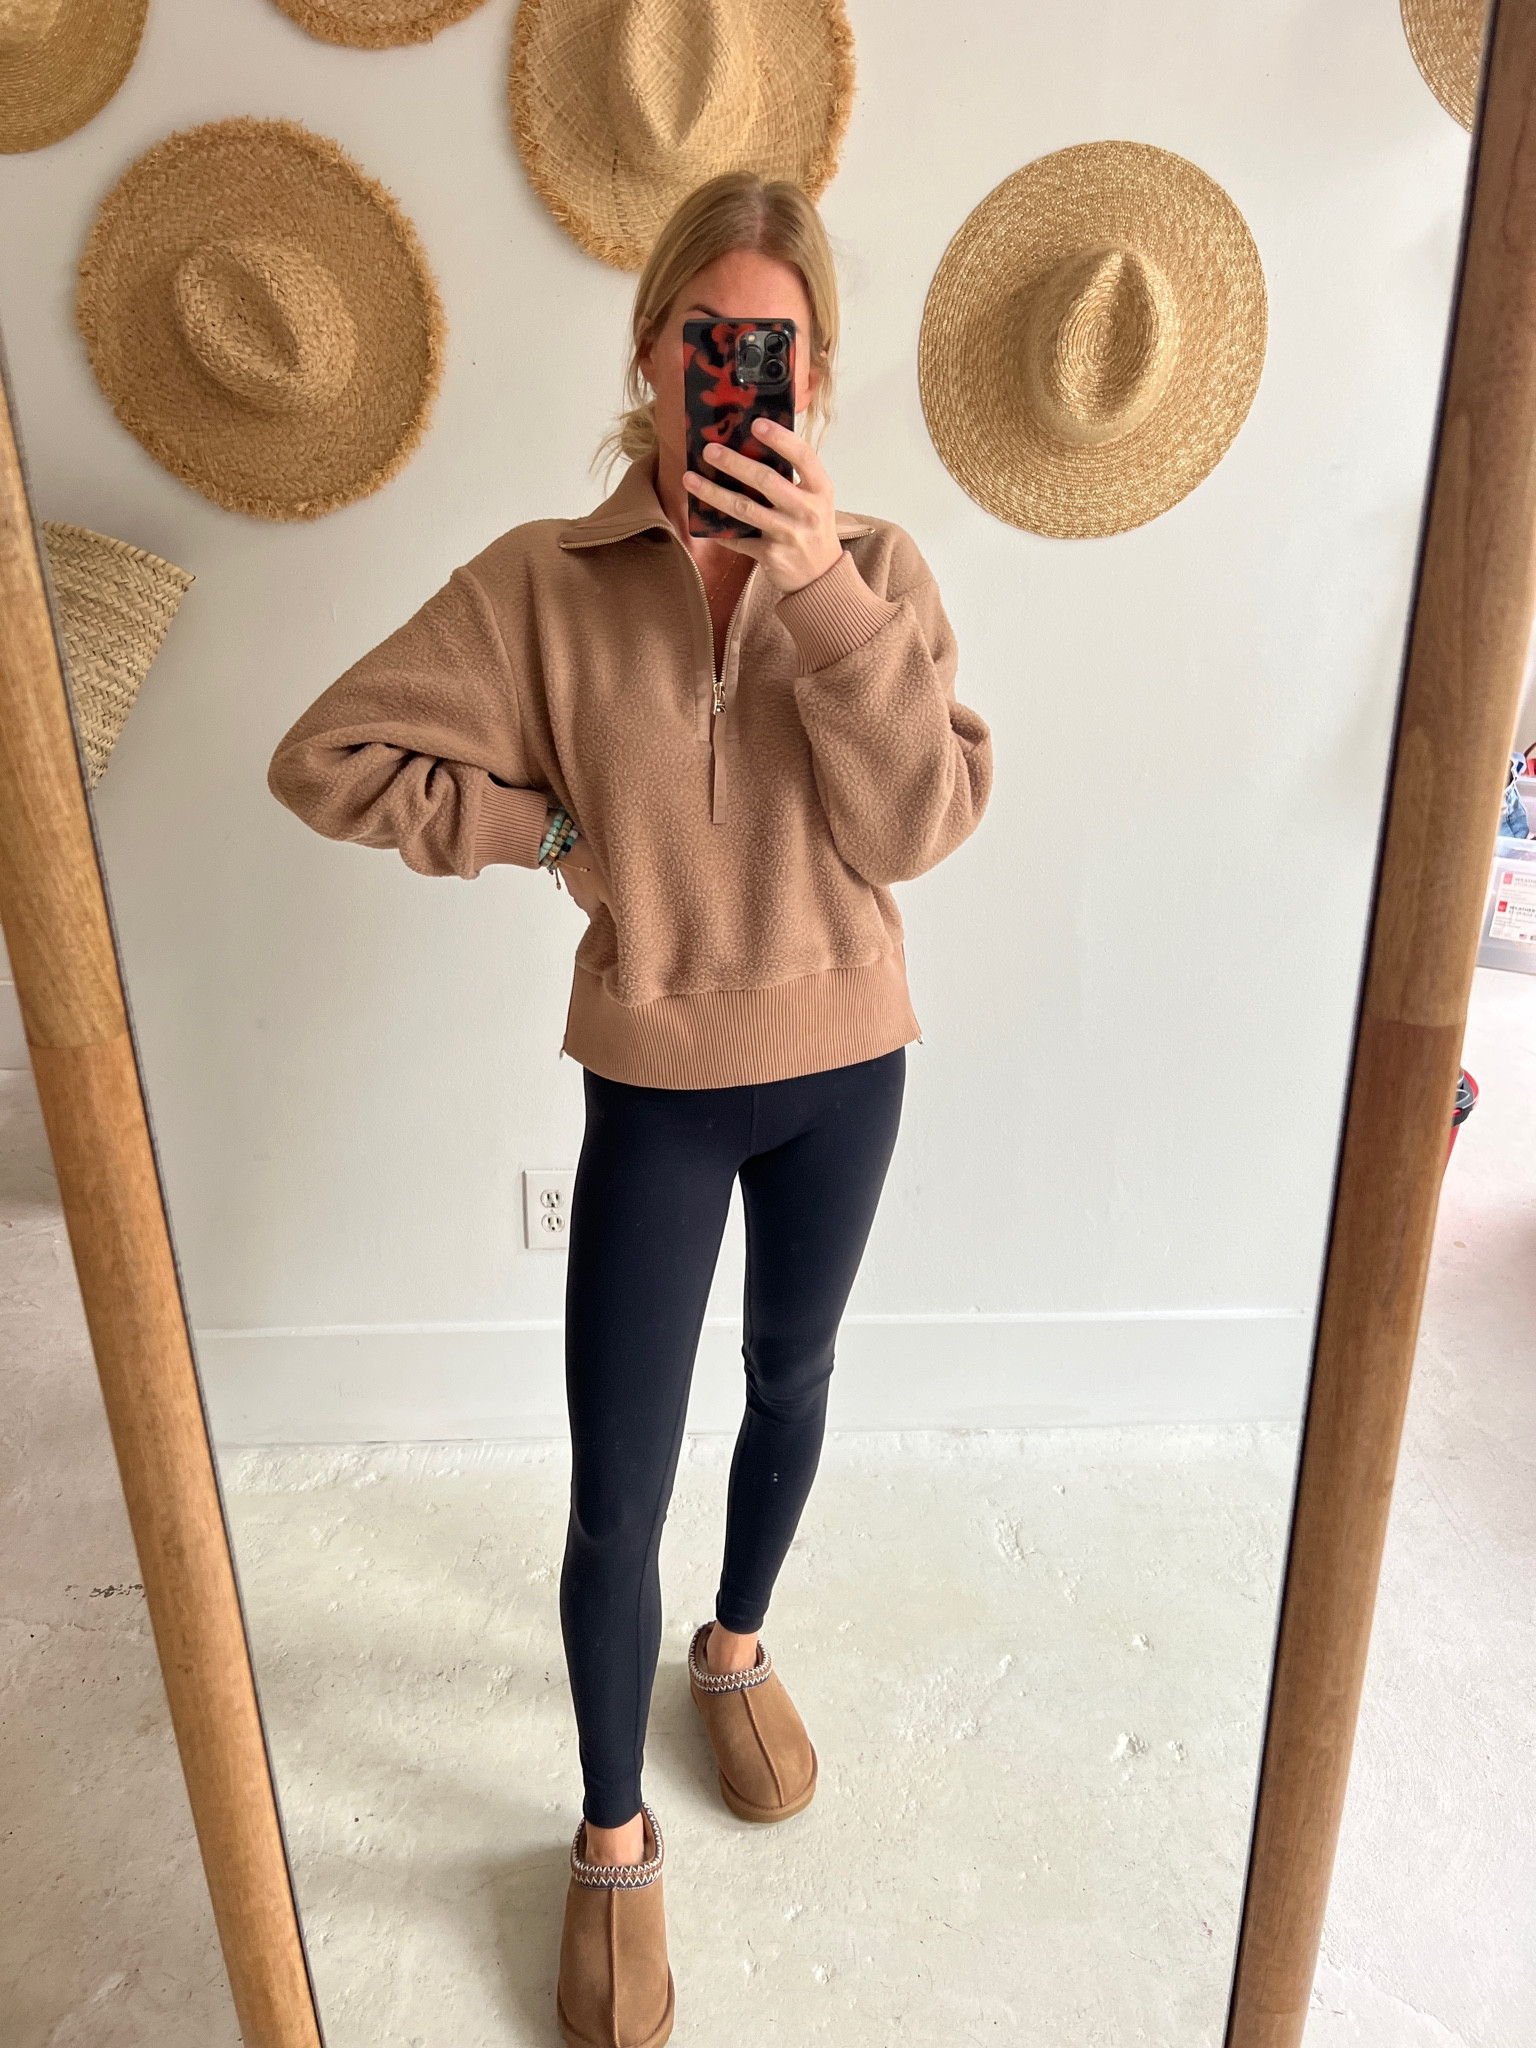 Varley Elise Half-Zip Sweater curated on LTK